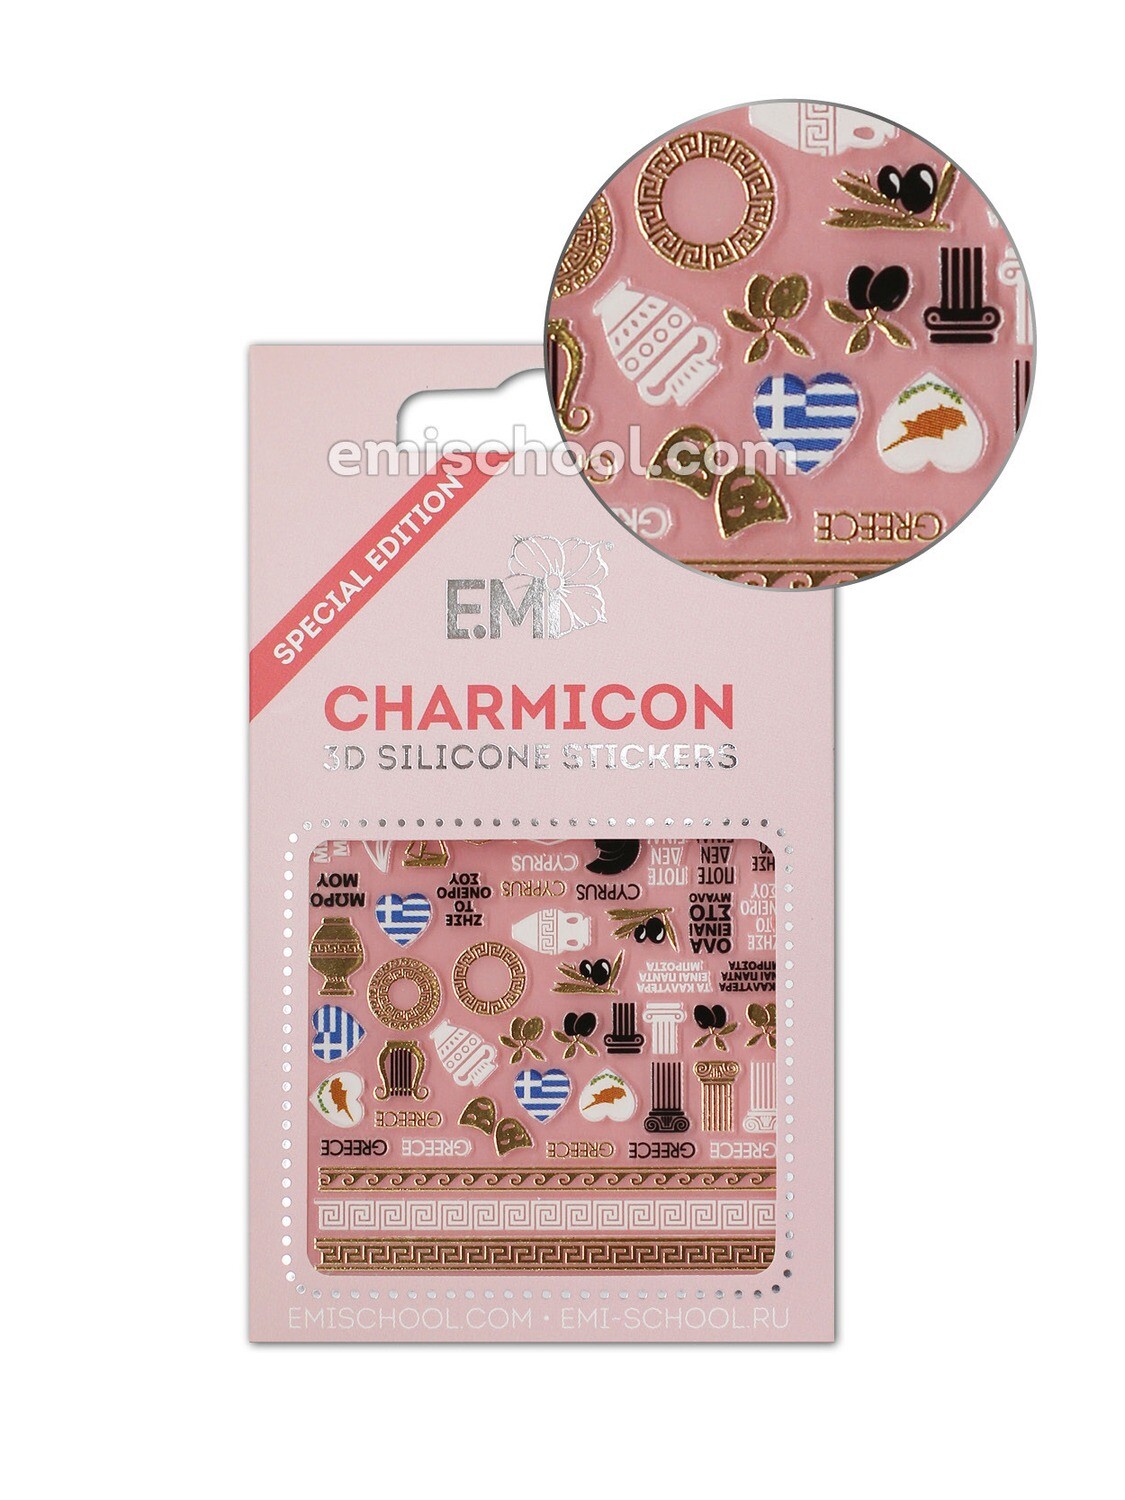 Charmicon 3D Silicone Stickers Greece